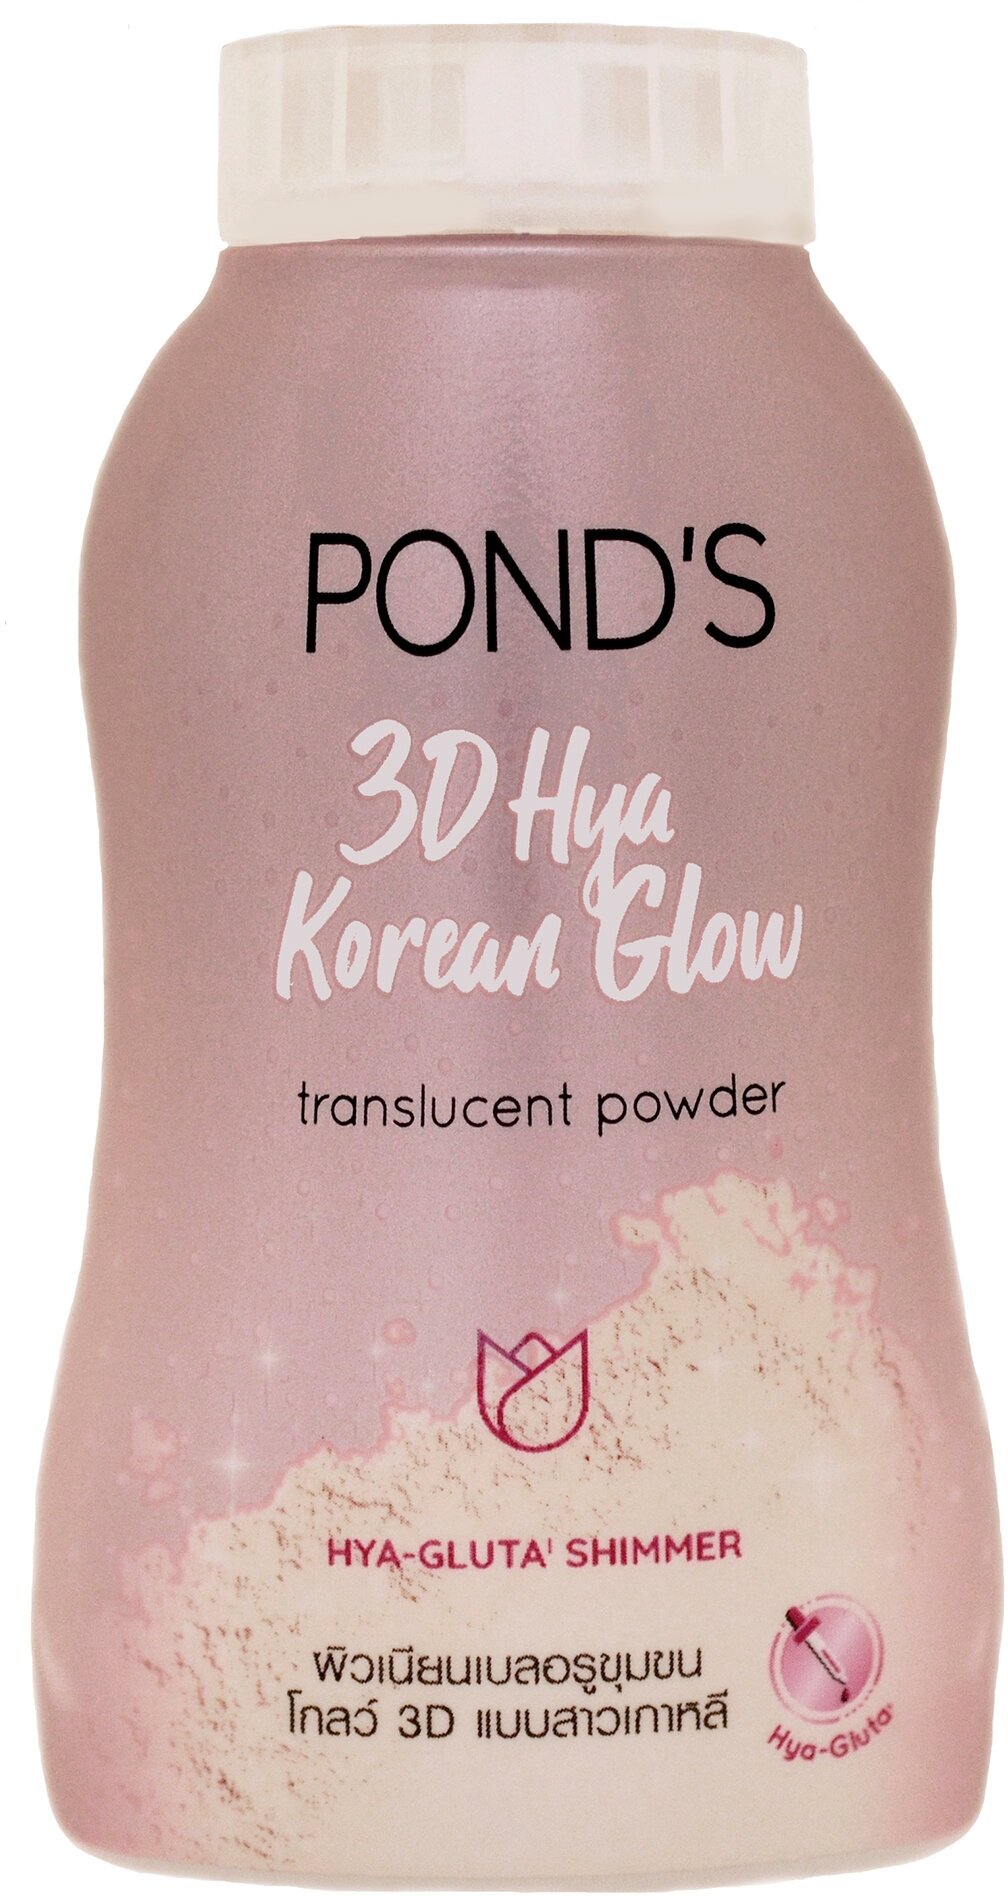 Пудра для лица POND'S 3D-сияние Korean Glow, 50 г.